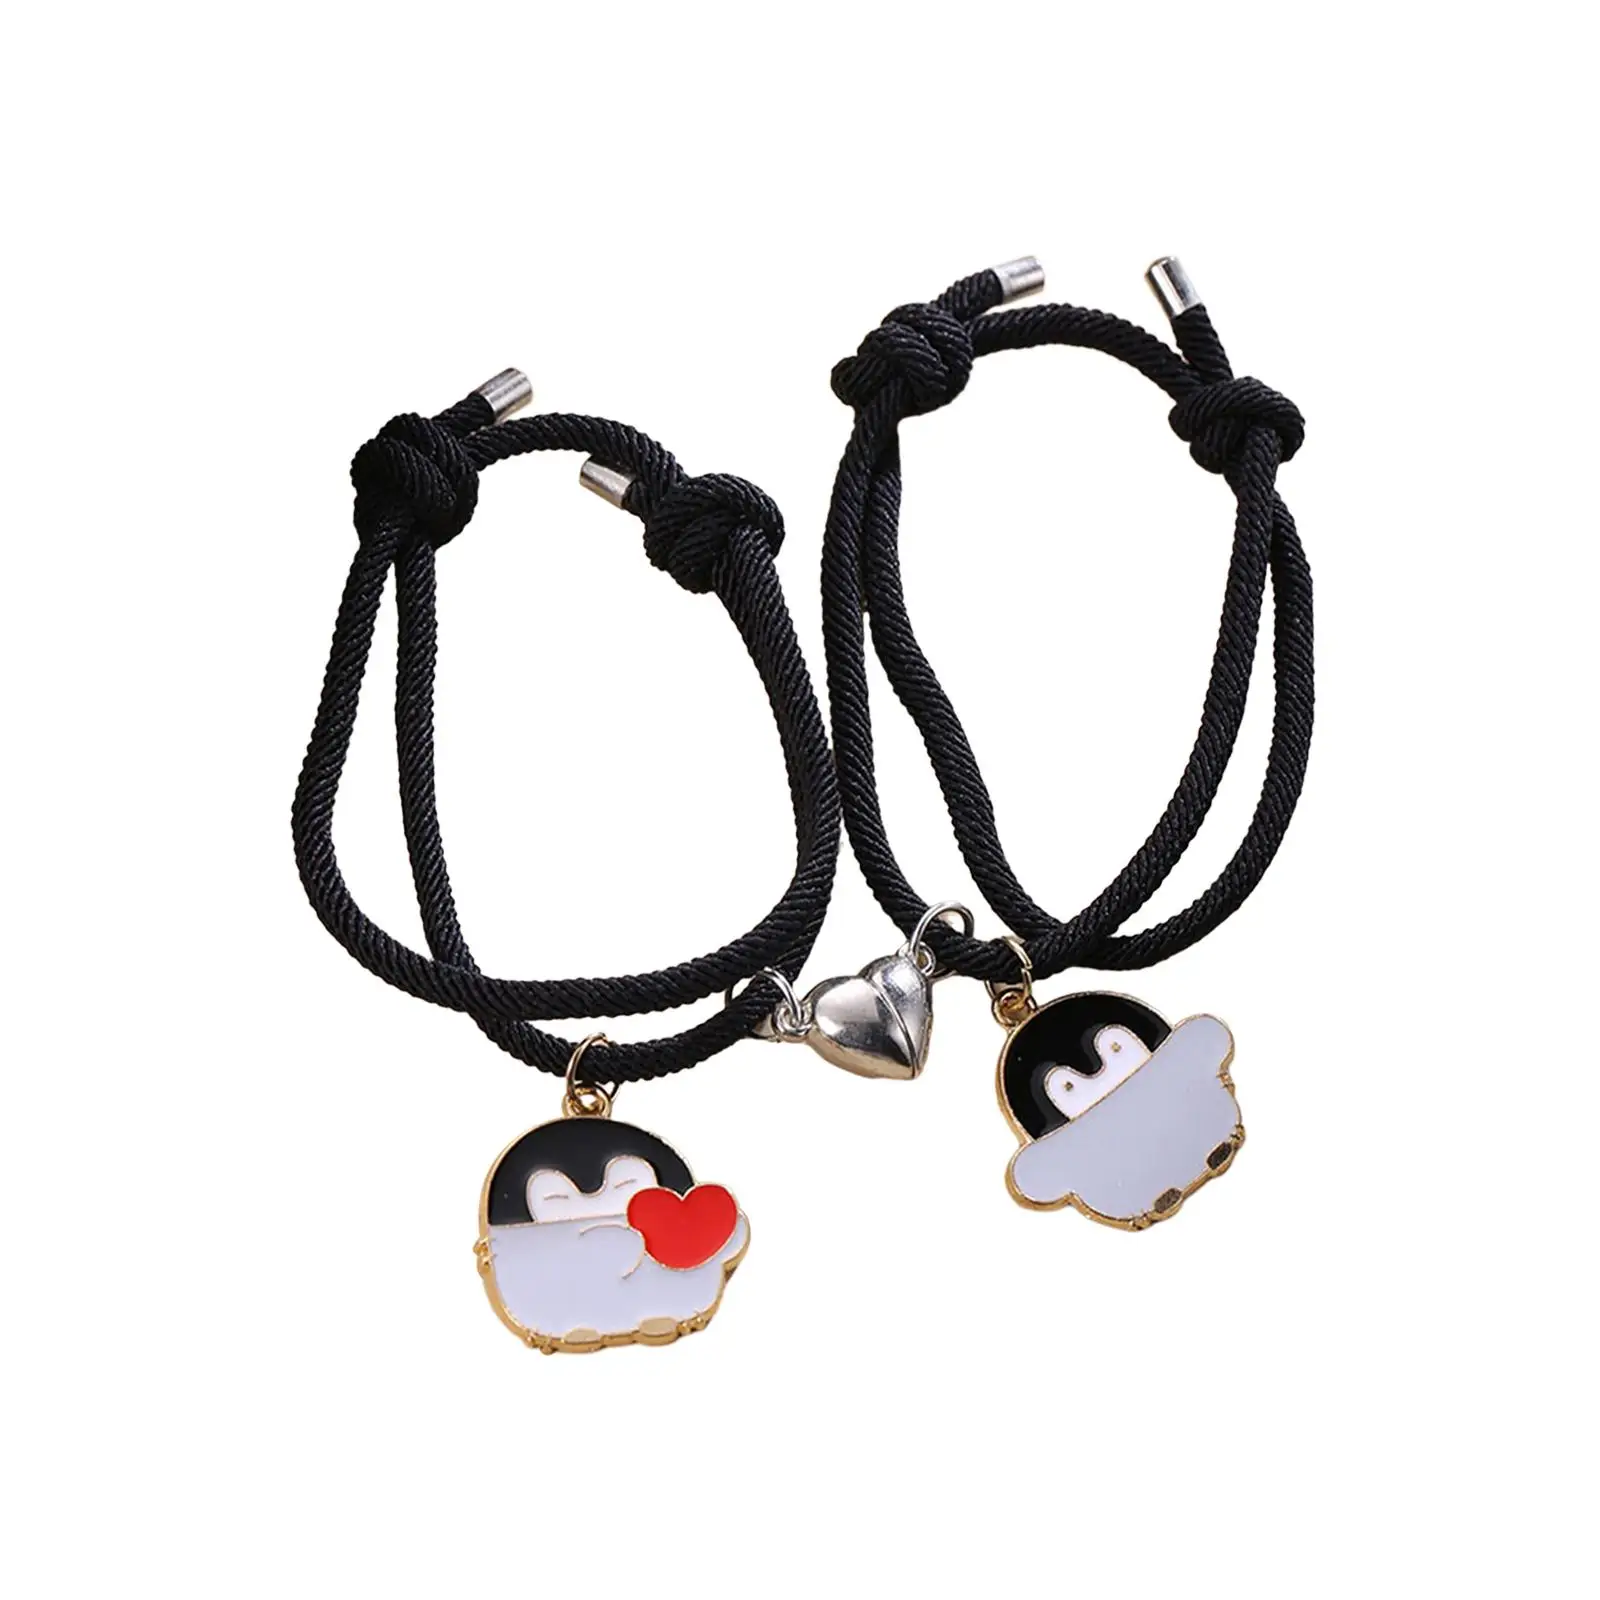 Magnet Couple Bracelets Relationship Bracelets for Friends Lovers Men Women